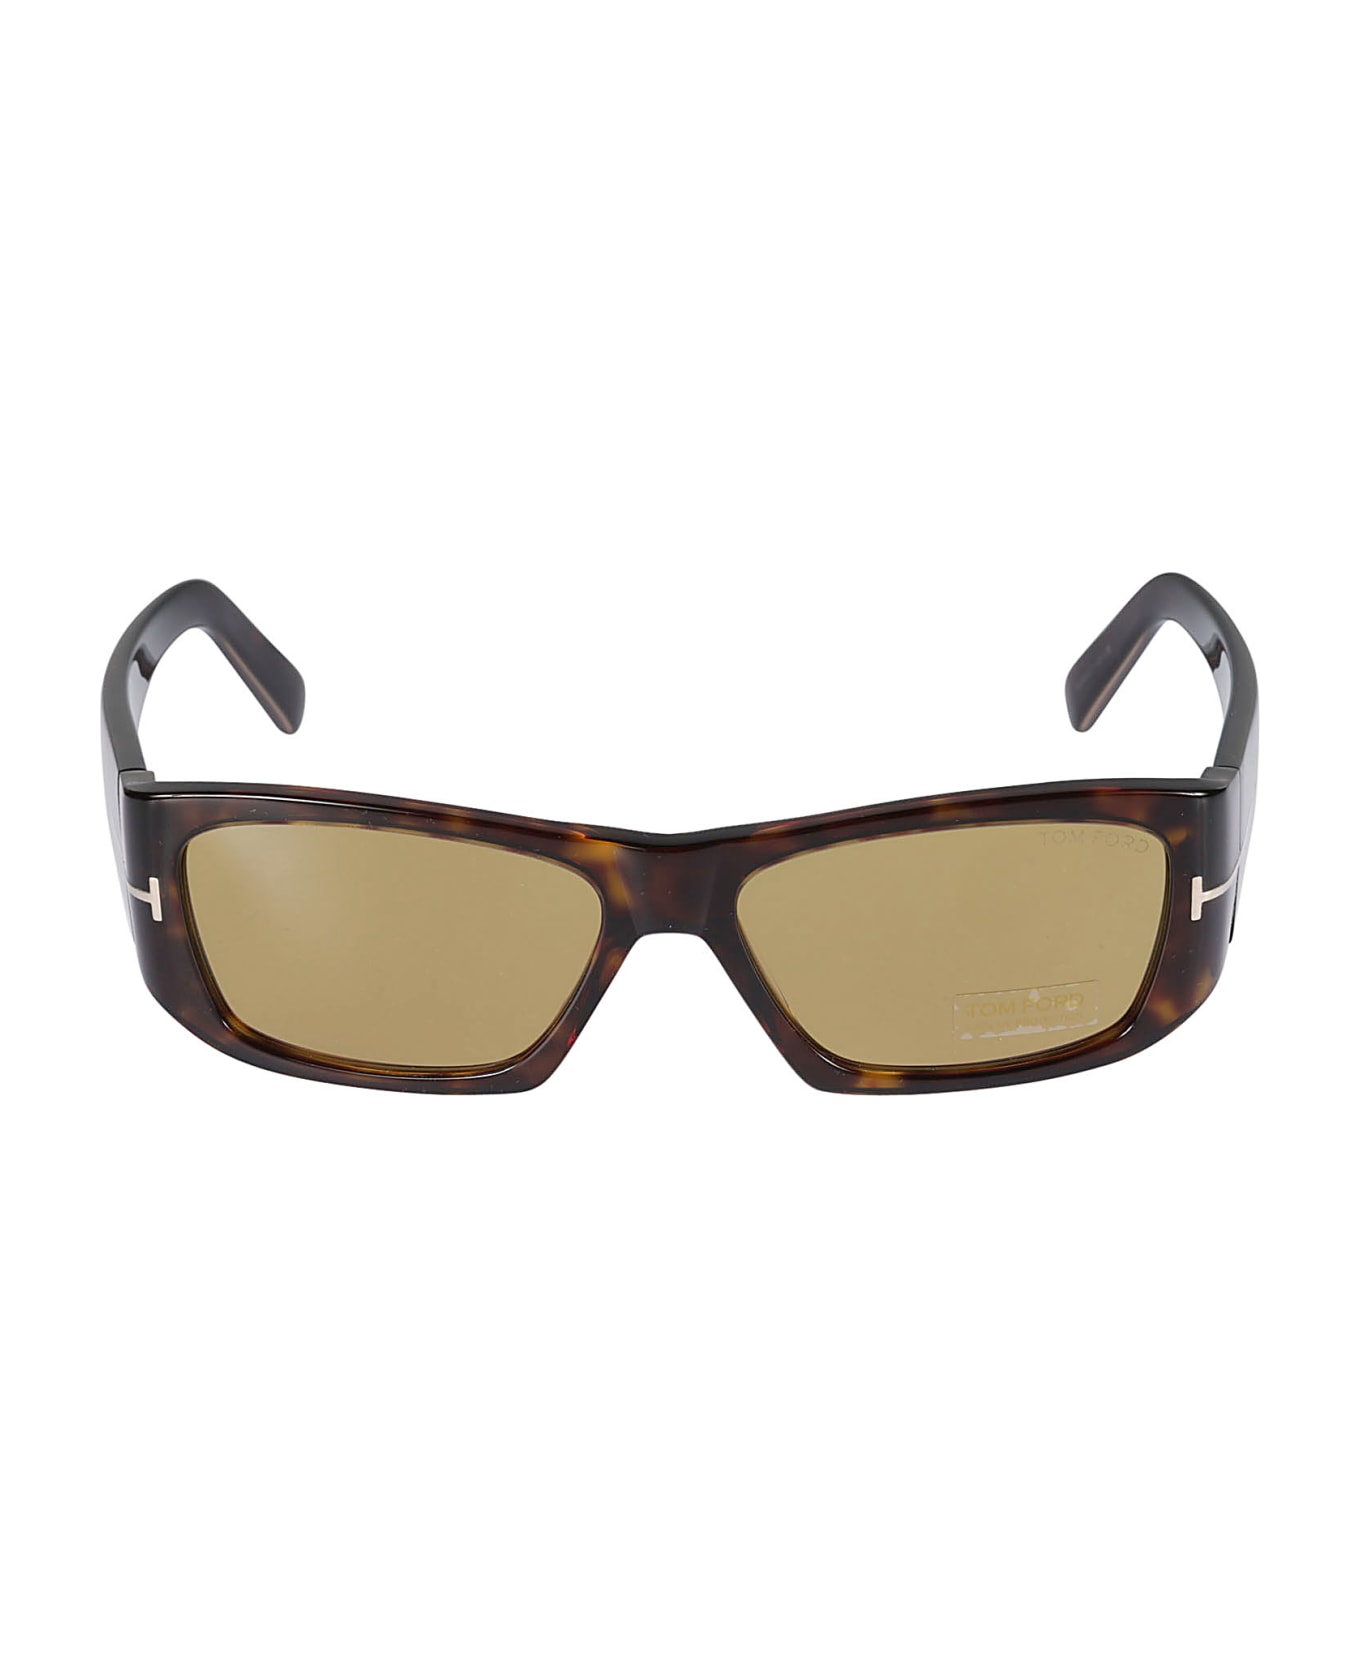 Tom Ford Eyewear Andres-02 Sunglasses - N/A